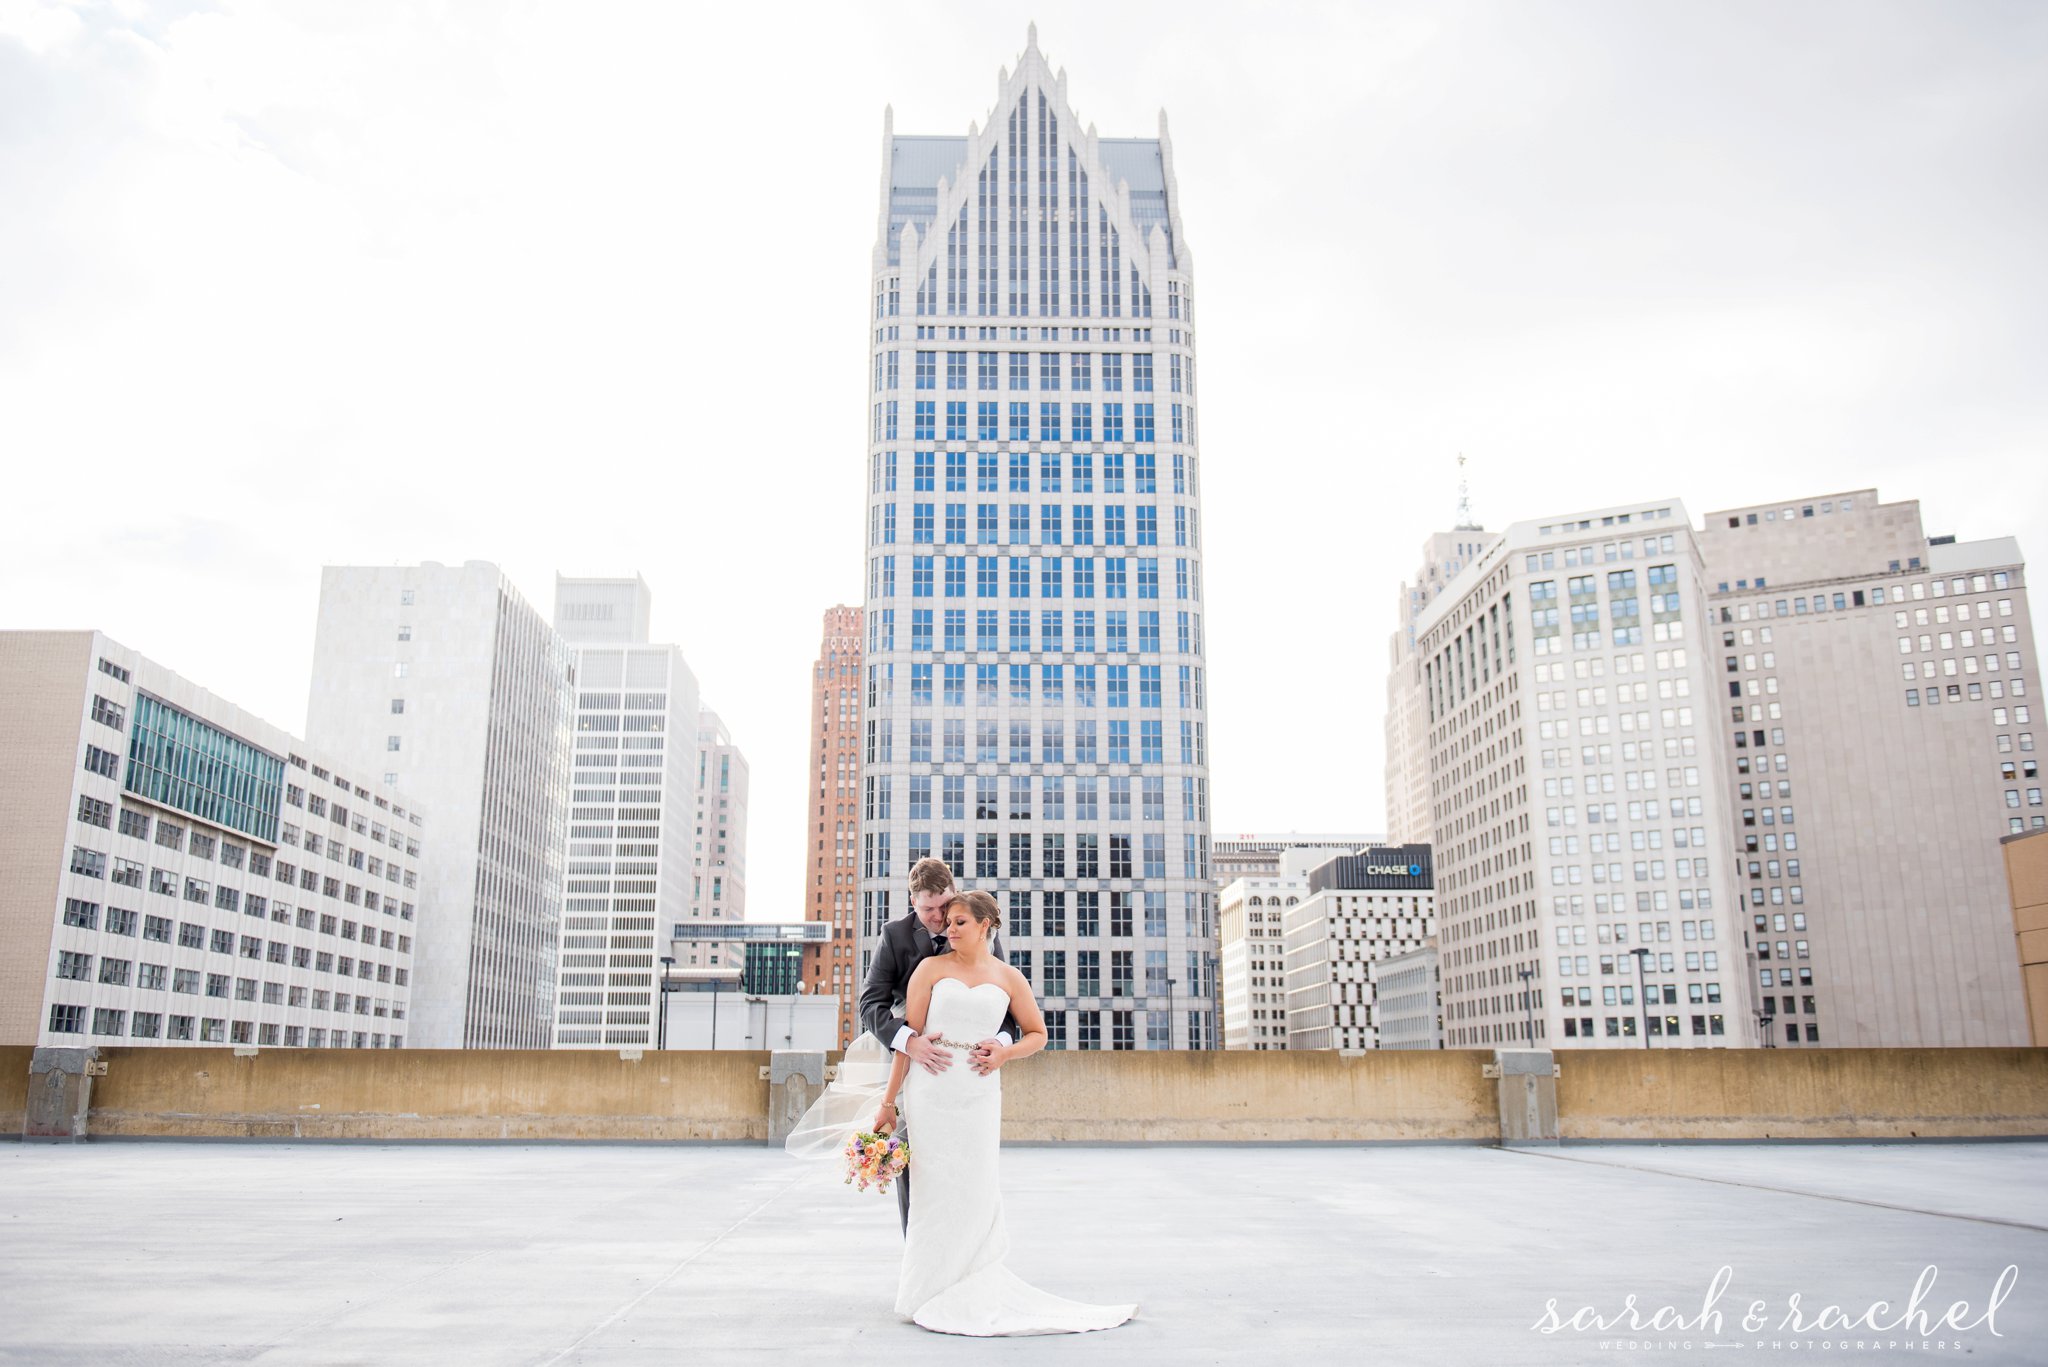 Detroit Skyline Wedding Photography | Rooftop Detroit | Dearborn Inn Wedding | Detroit Michigan | Sarah and Rachel Wedding Photographers